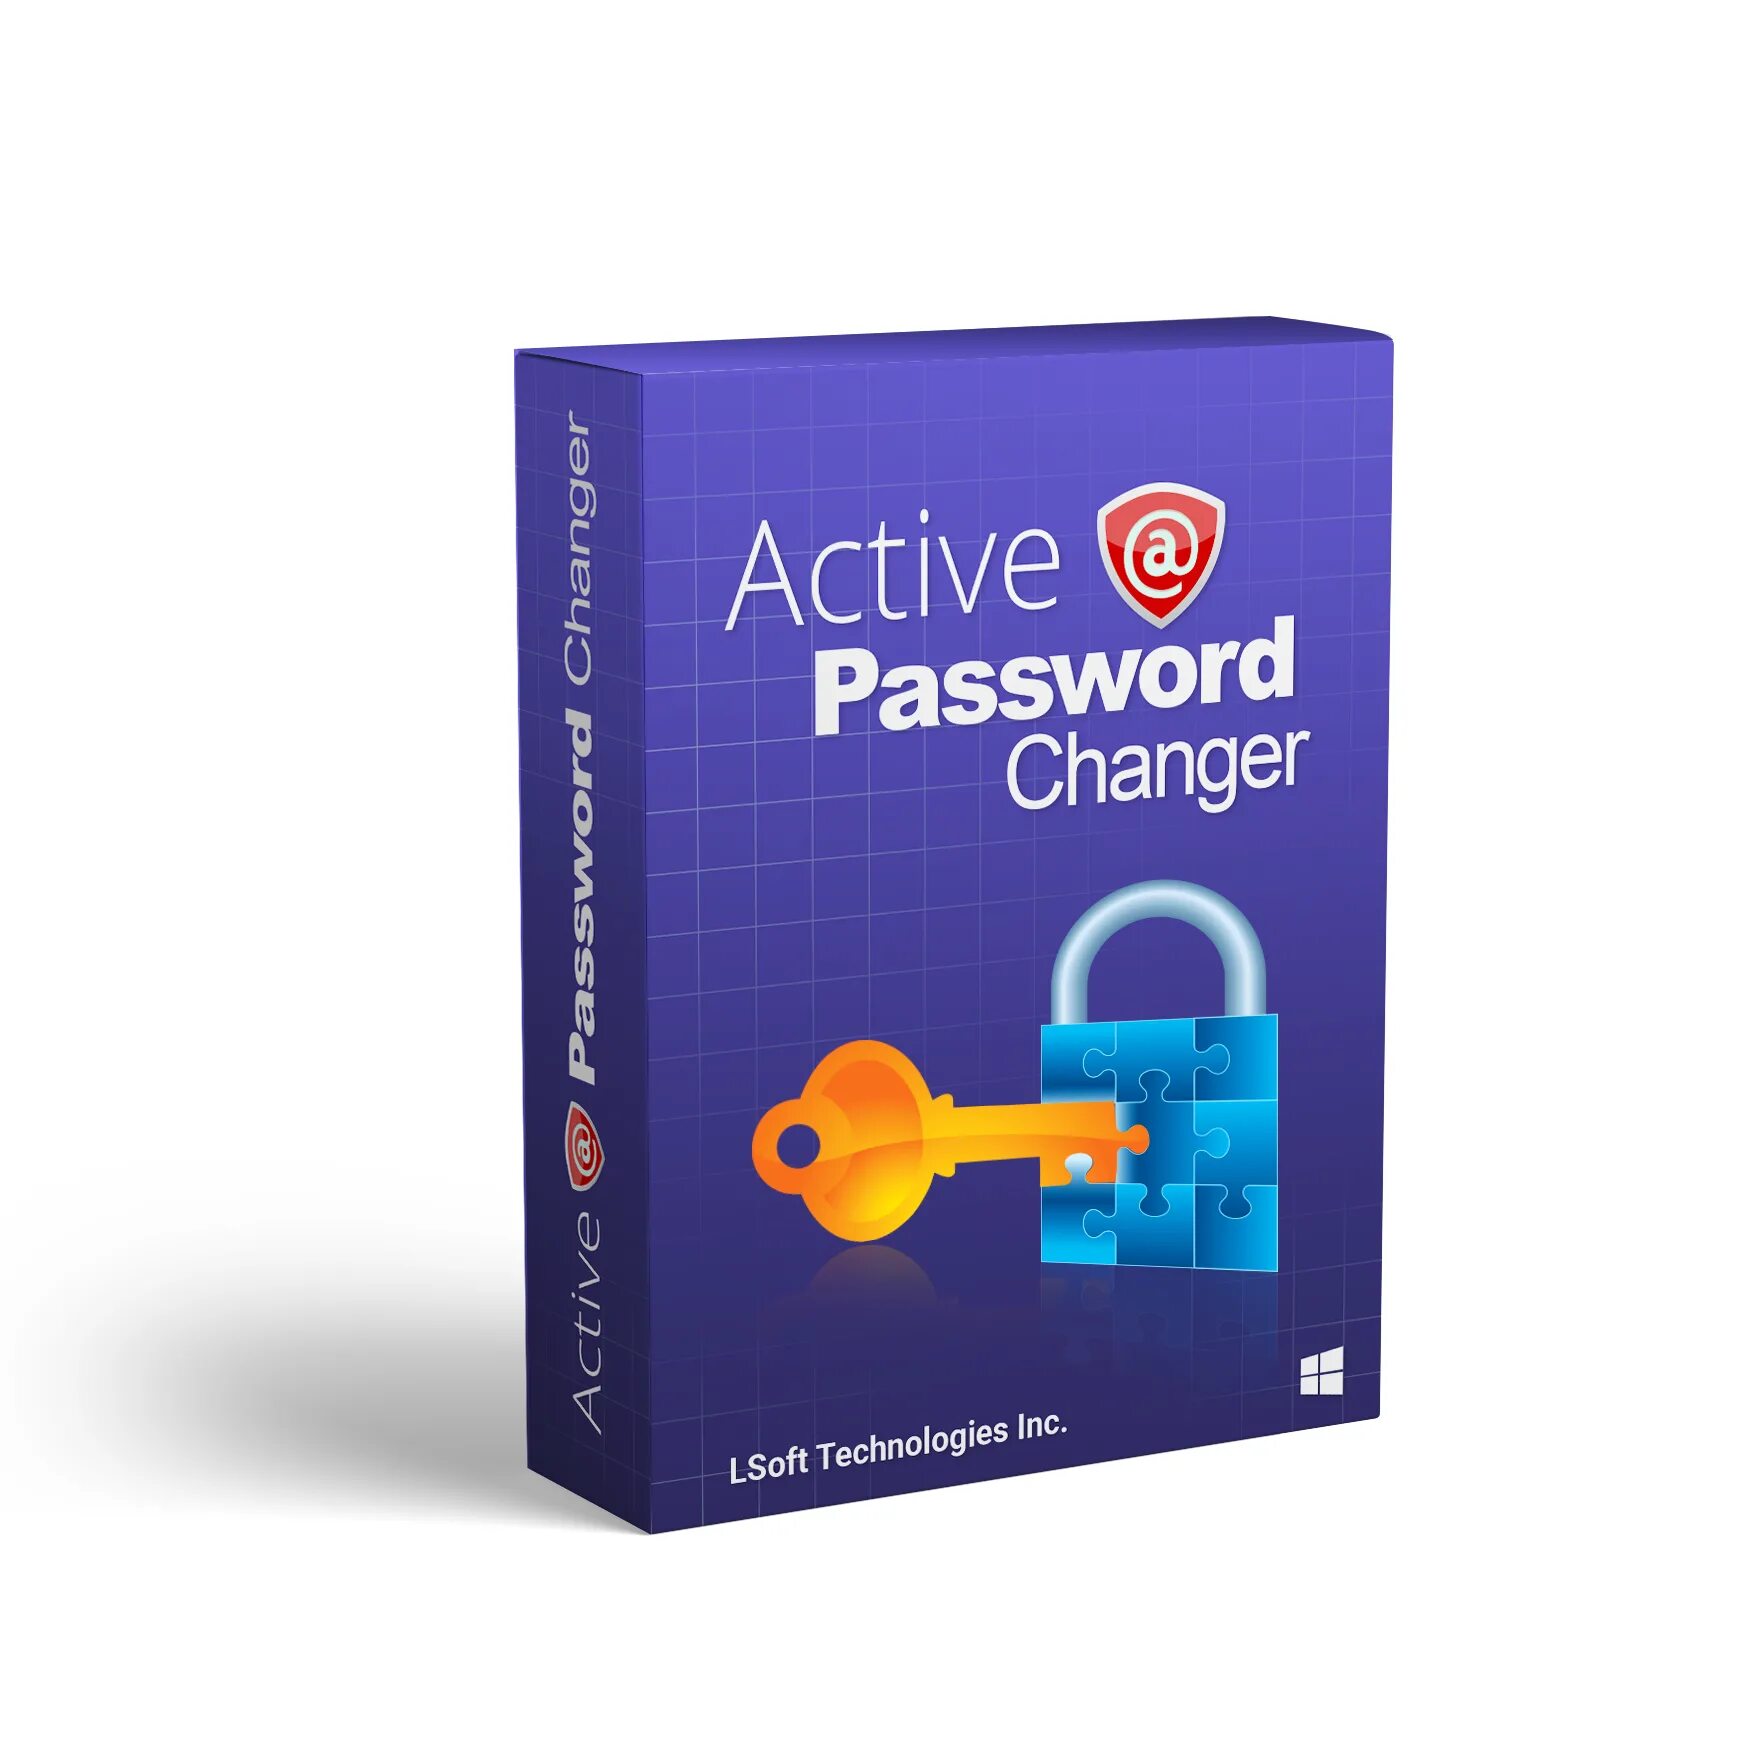 Паролем актив. Active password Changer. Active password Changer 9.0.1.0. Active password Changer 10.0.1.0 (Eng). Active password Changer Ultimate.